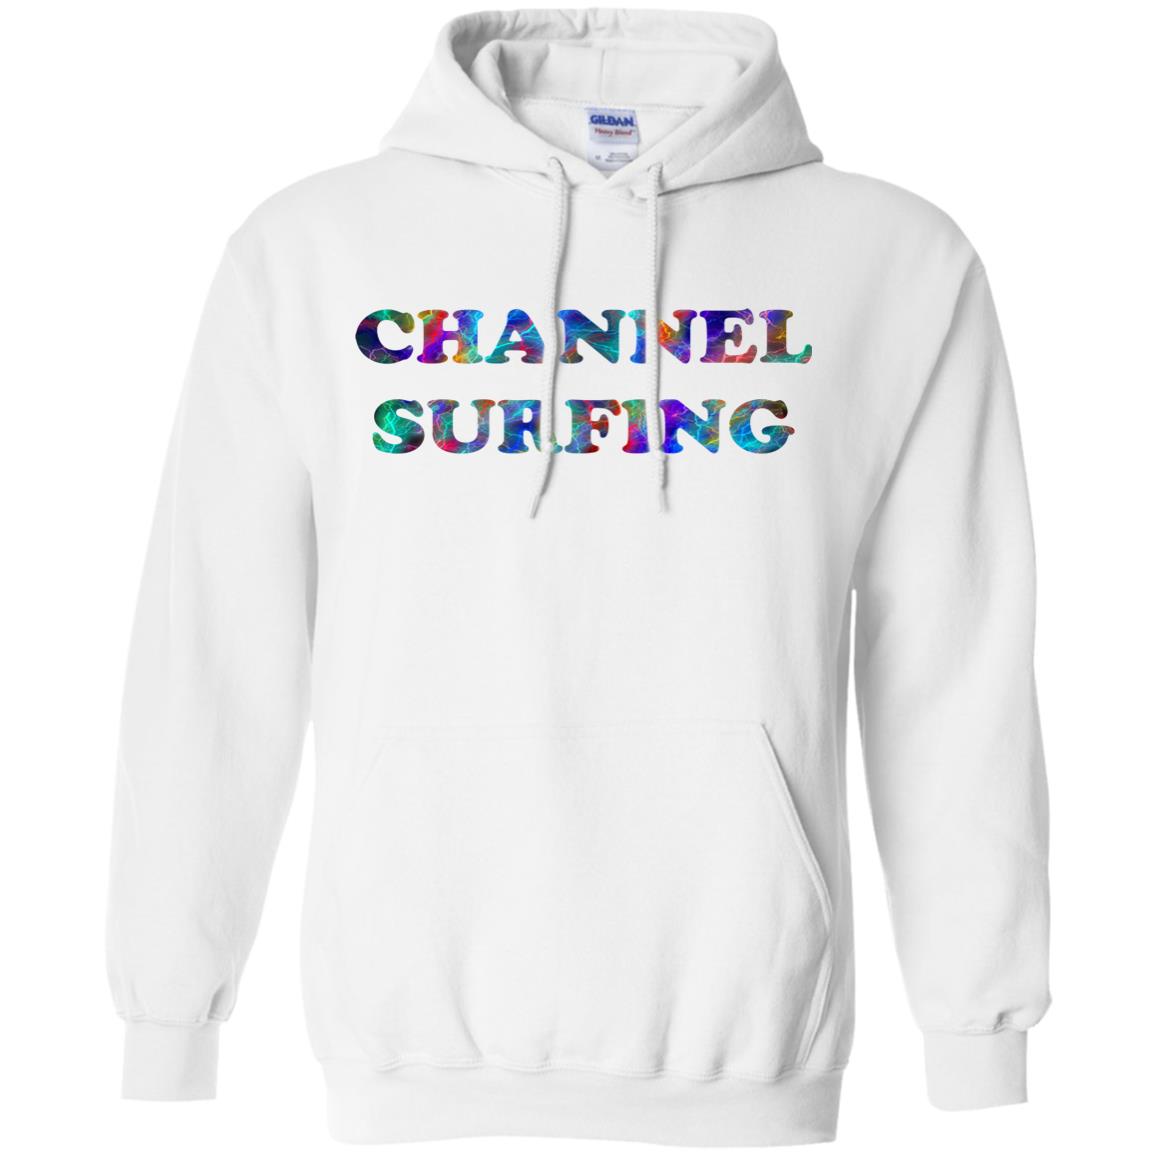 Channel Surfing Hoodie